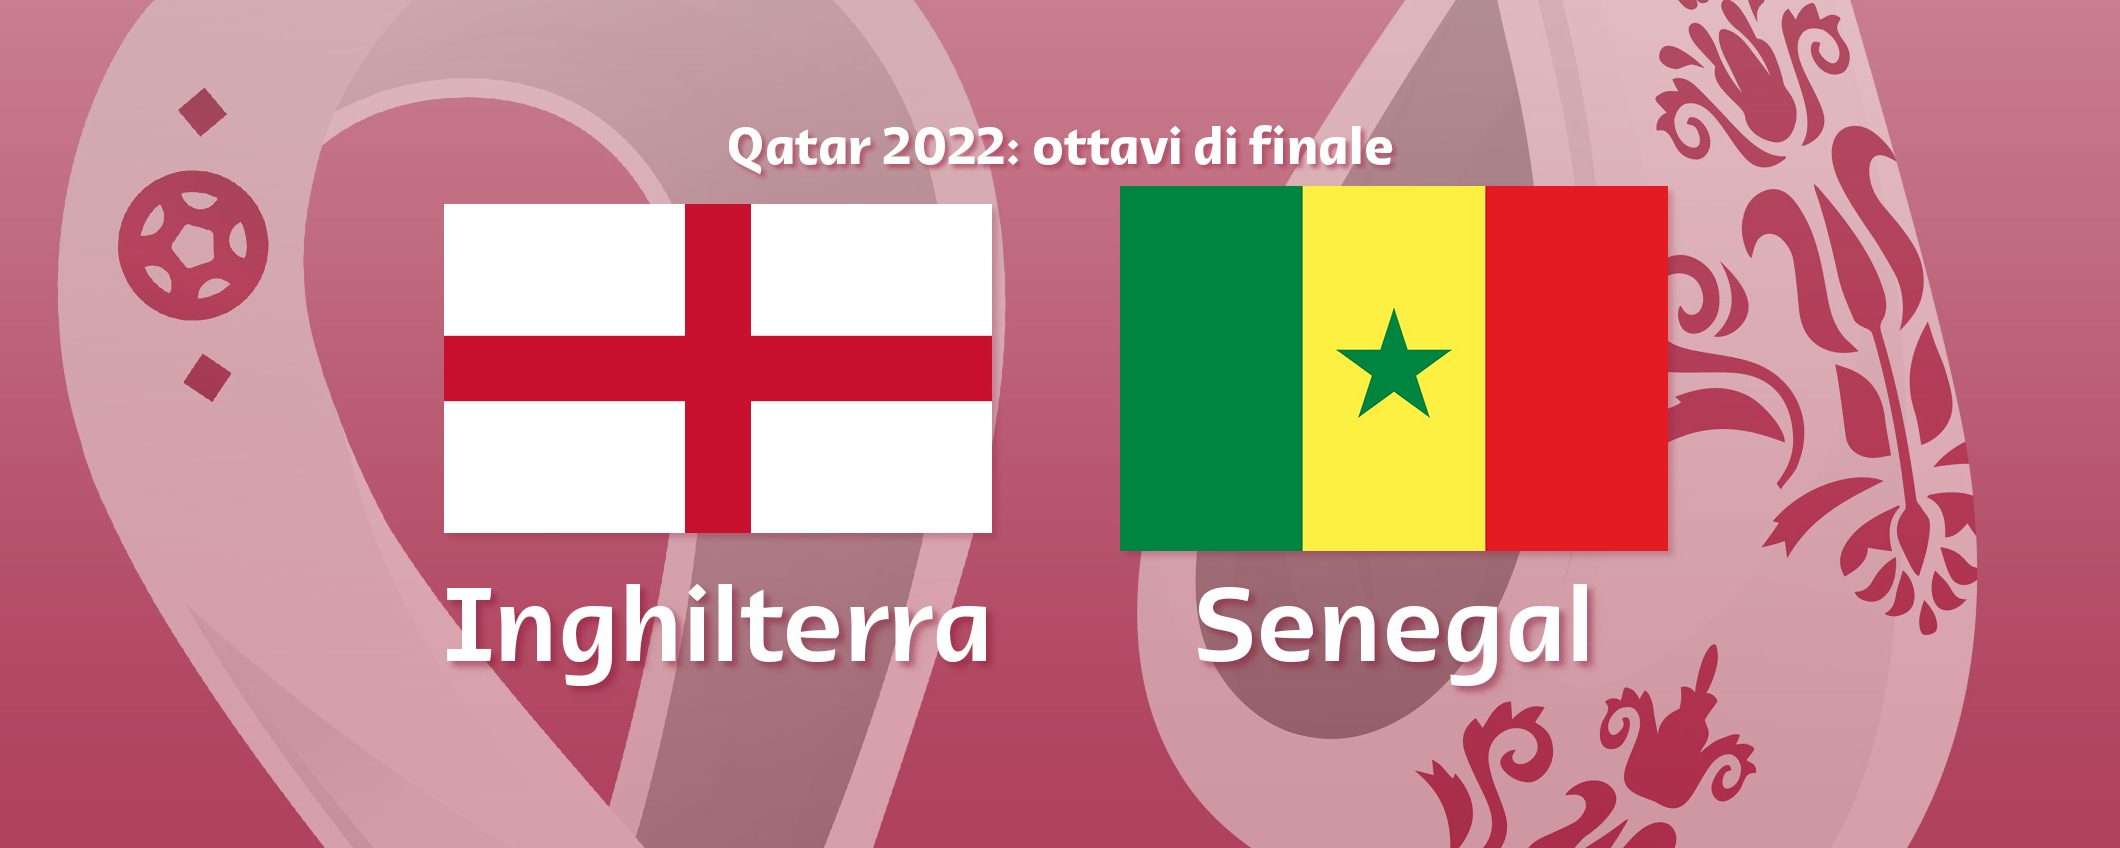 Come vedere Inghilterra-Senegal in streaming